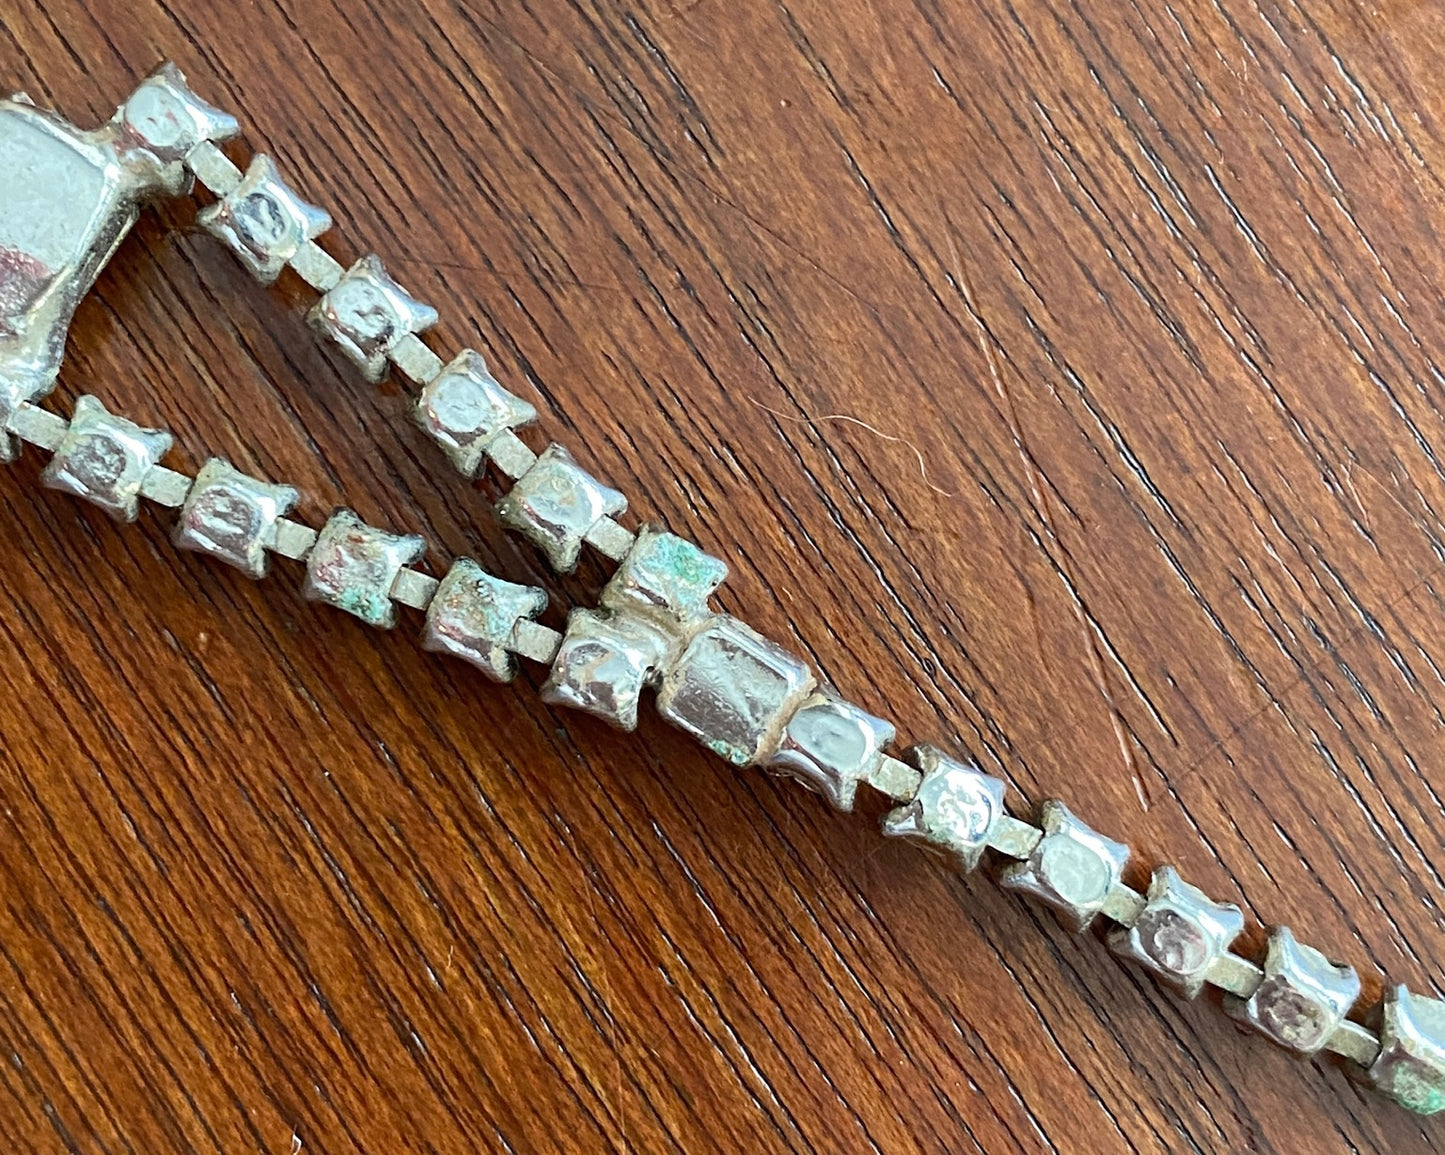 Vintage Silvertone Rhinestone Choker Necklace